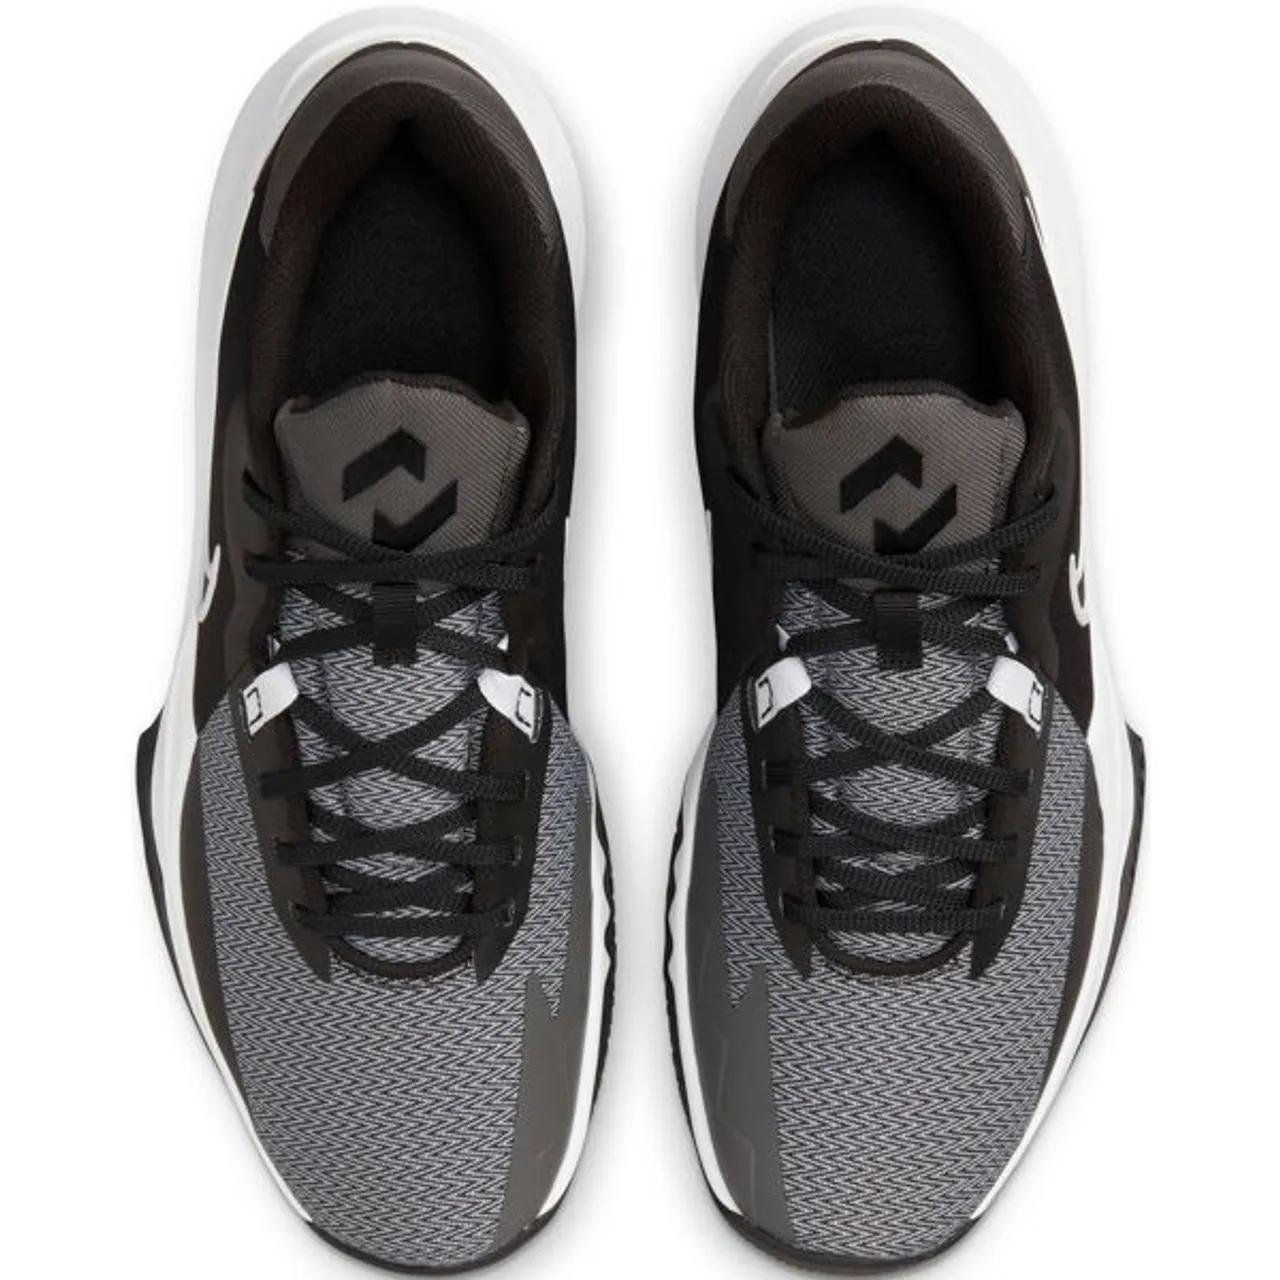 Basketballschuh NIKE "Precision 6" Gr. 46, schwarz-weiß (schwarz, weiß) Schuhe Stoffschuhe